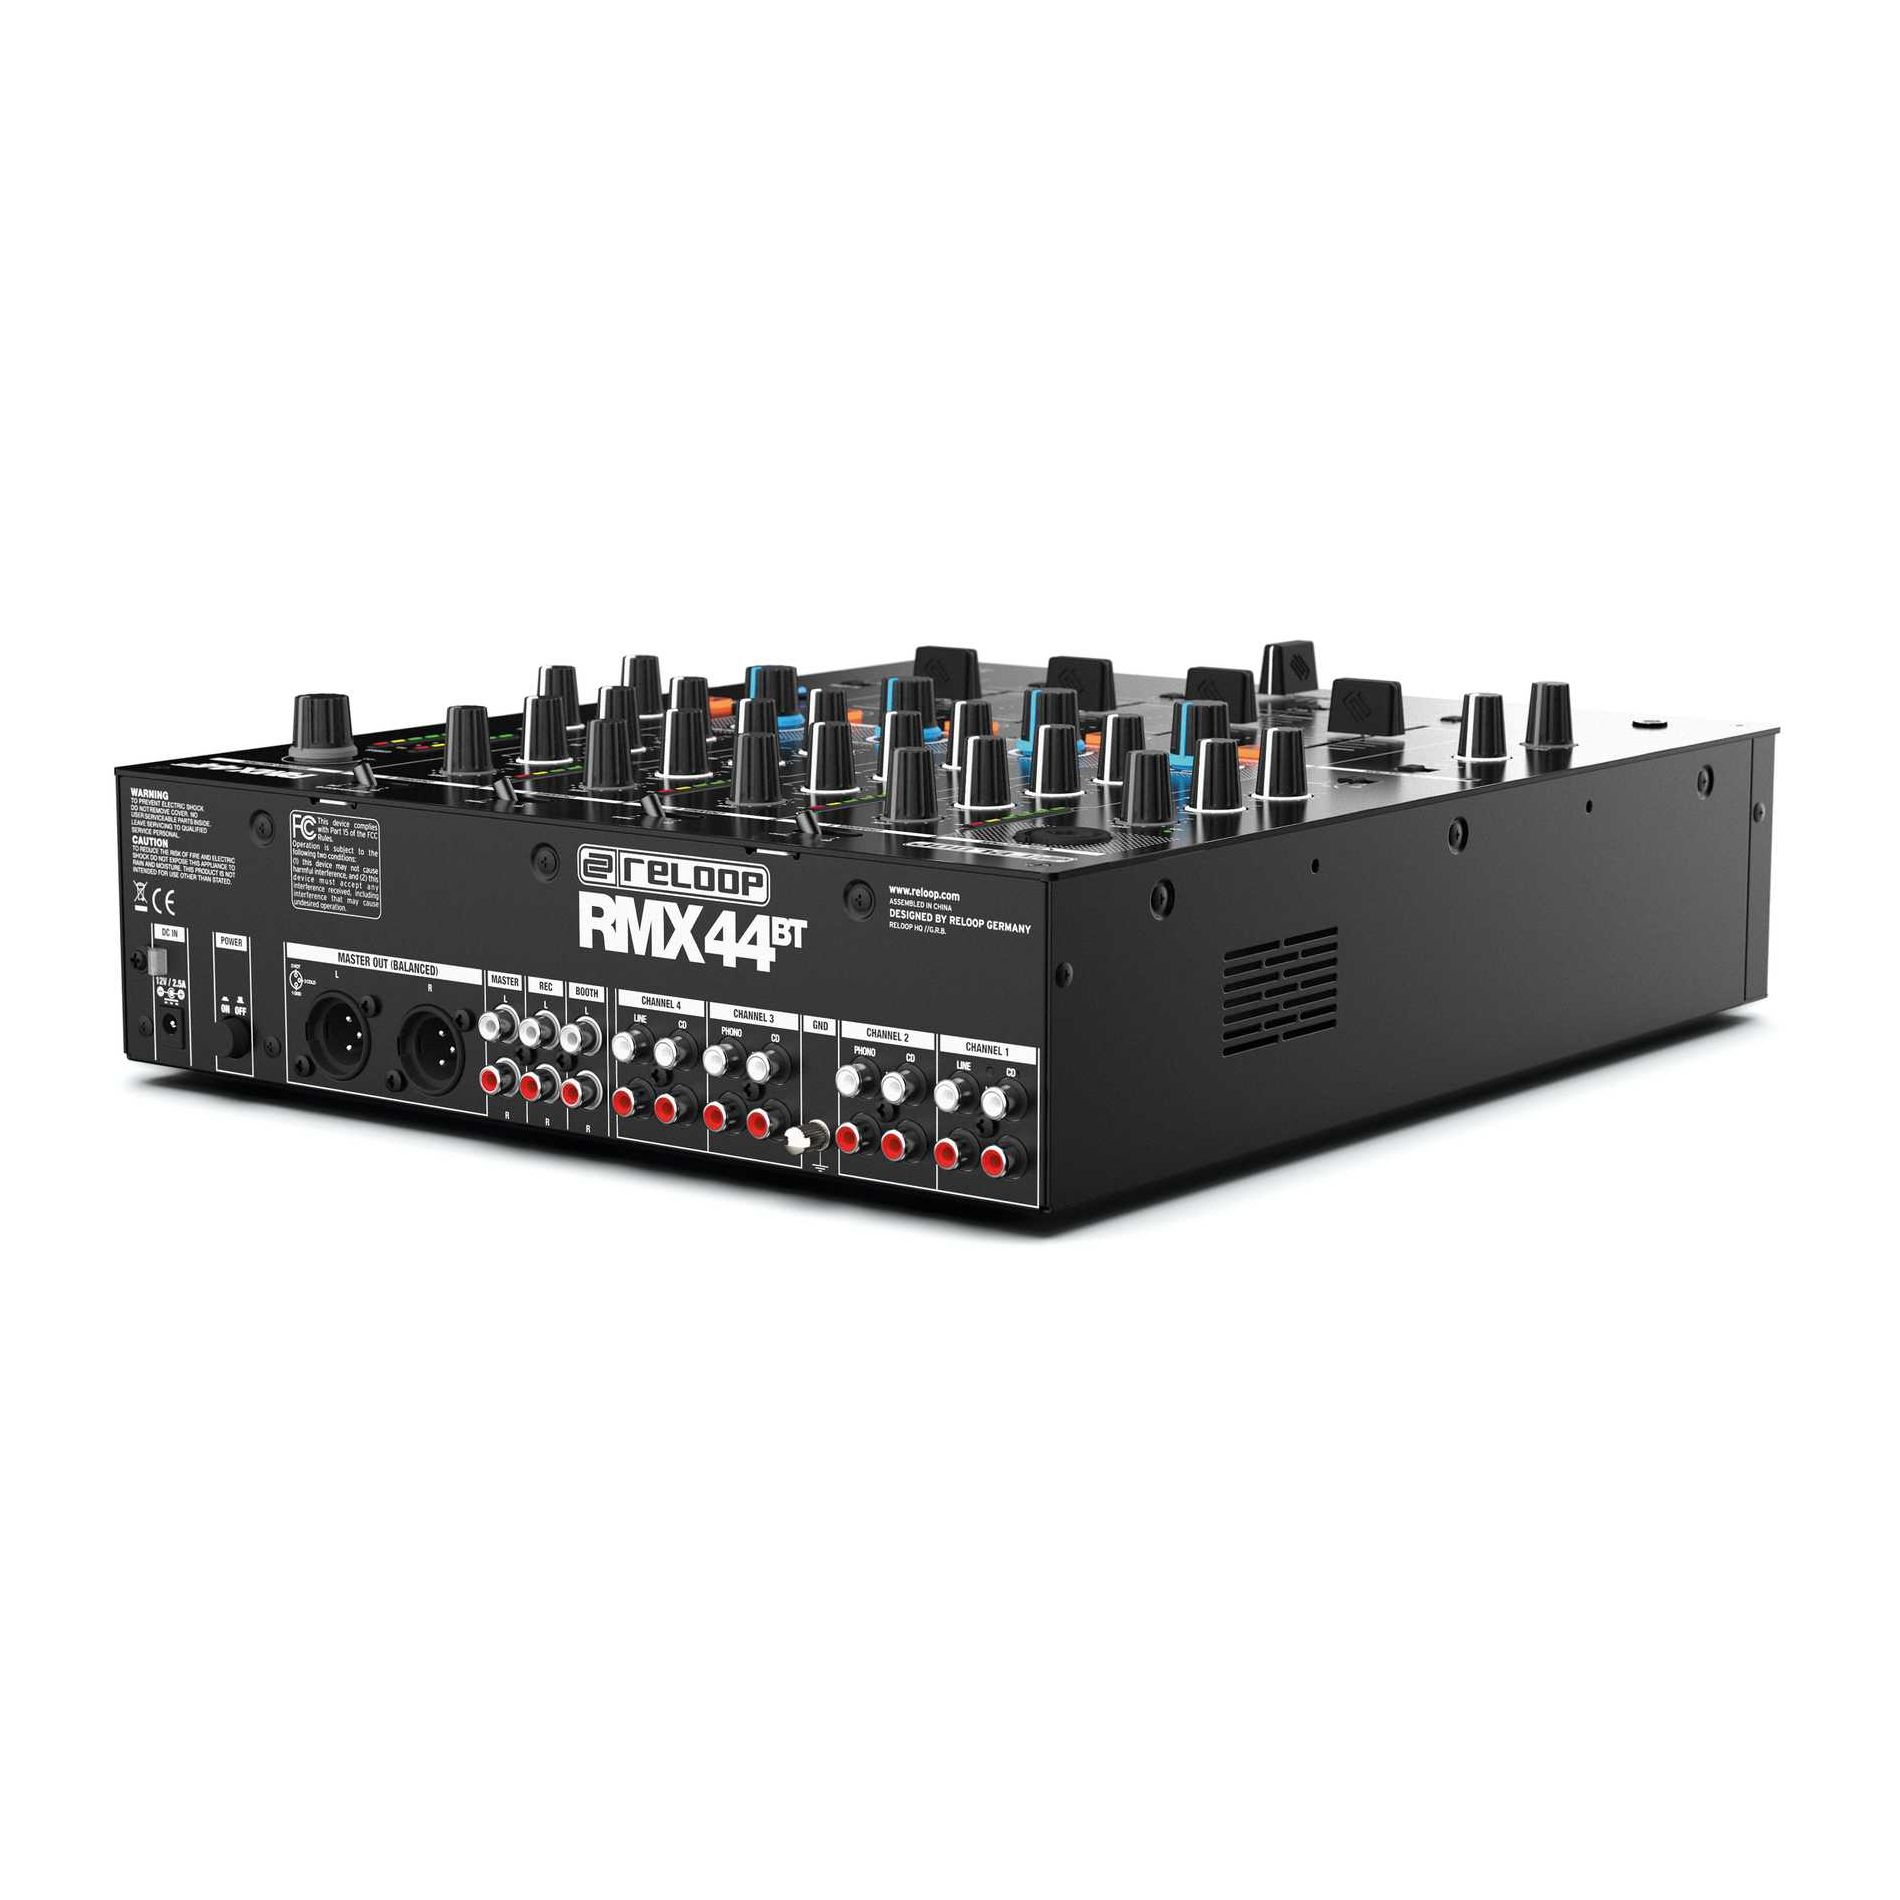 Reloop Rmx-44 Bt - Table De Mixage Dj - Variation 2